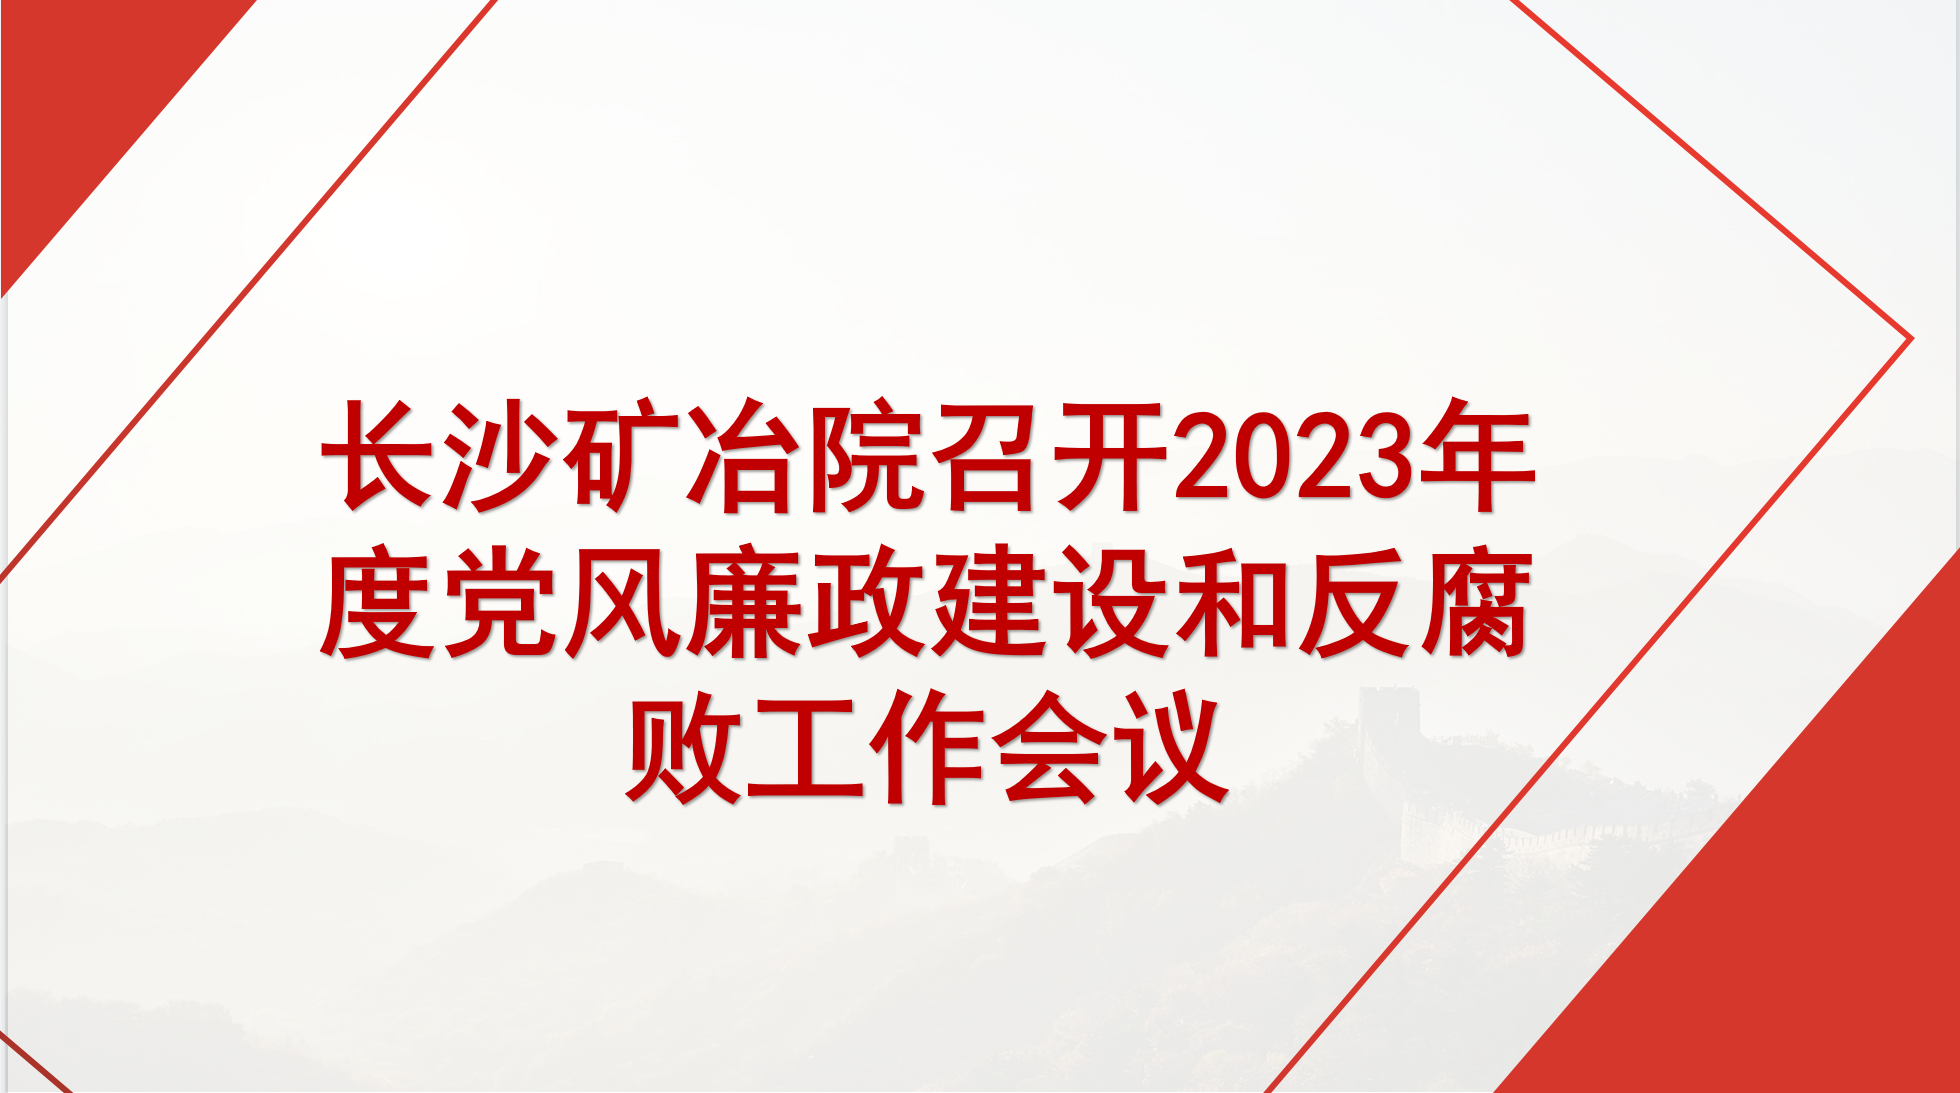 2138cn太阳集团古天乐召开2023年度党风廉政建设和反腐败工作会议